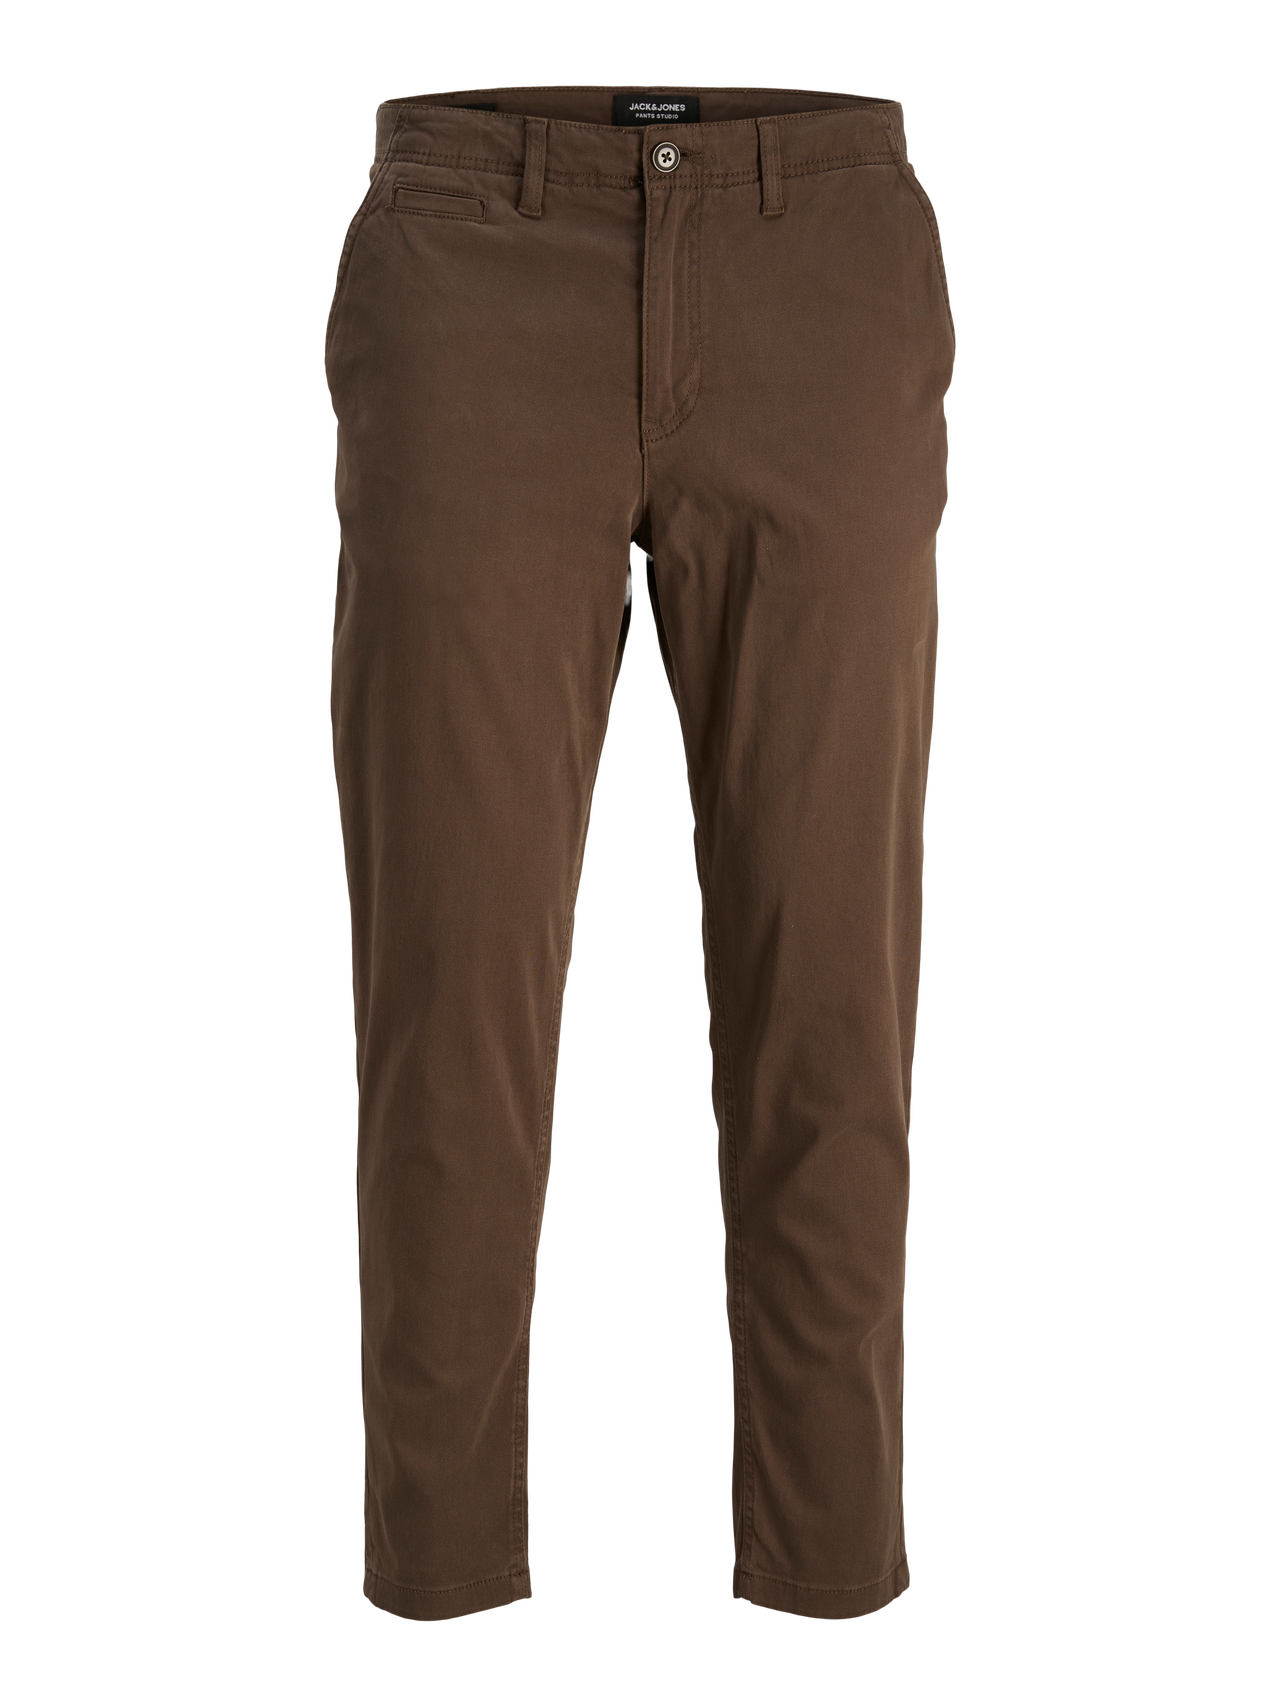 Jack & Jones Tapered Fit Chino pants -Chocolate Brown - 12242188